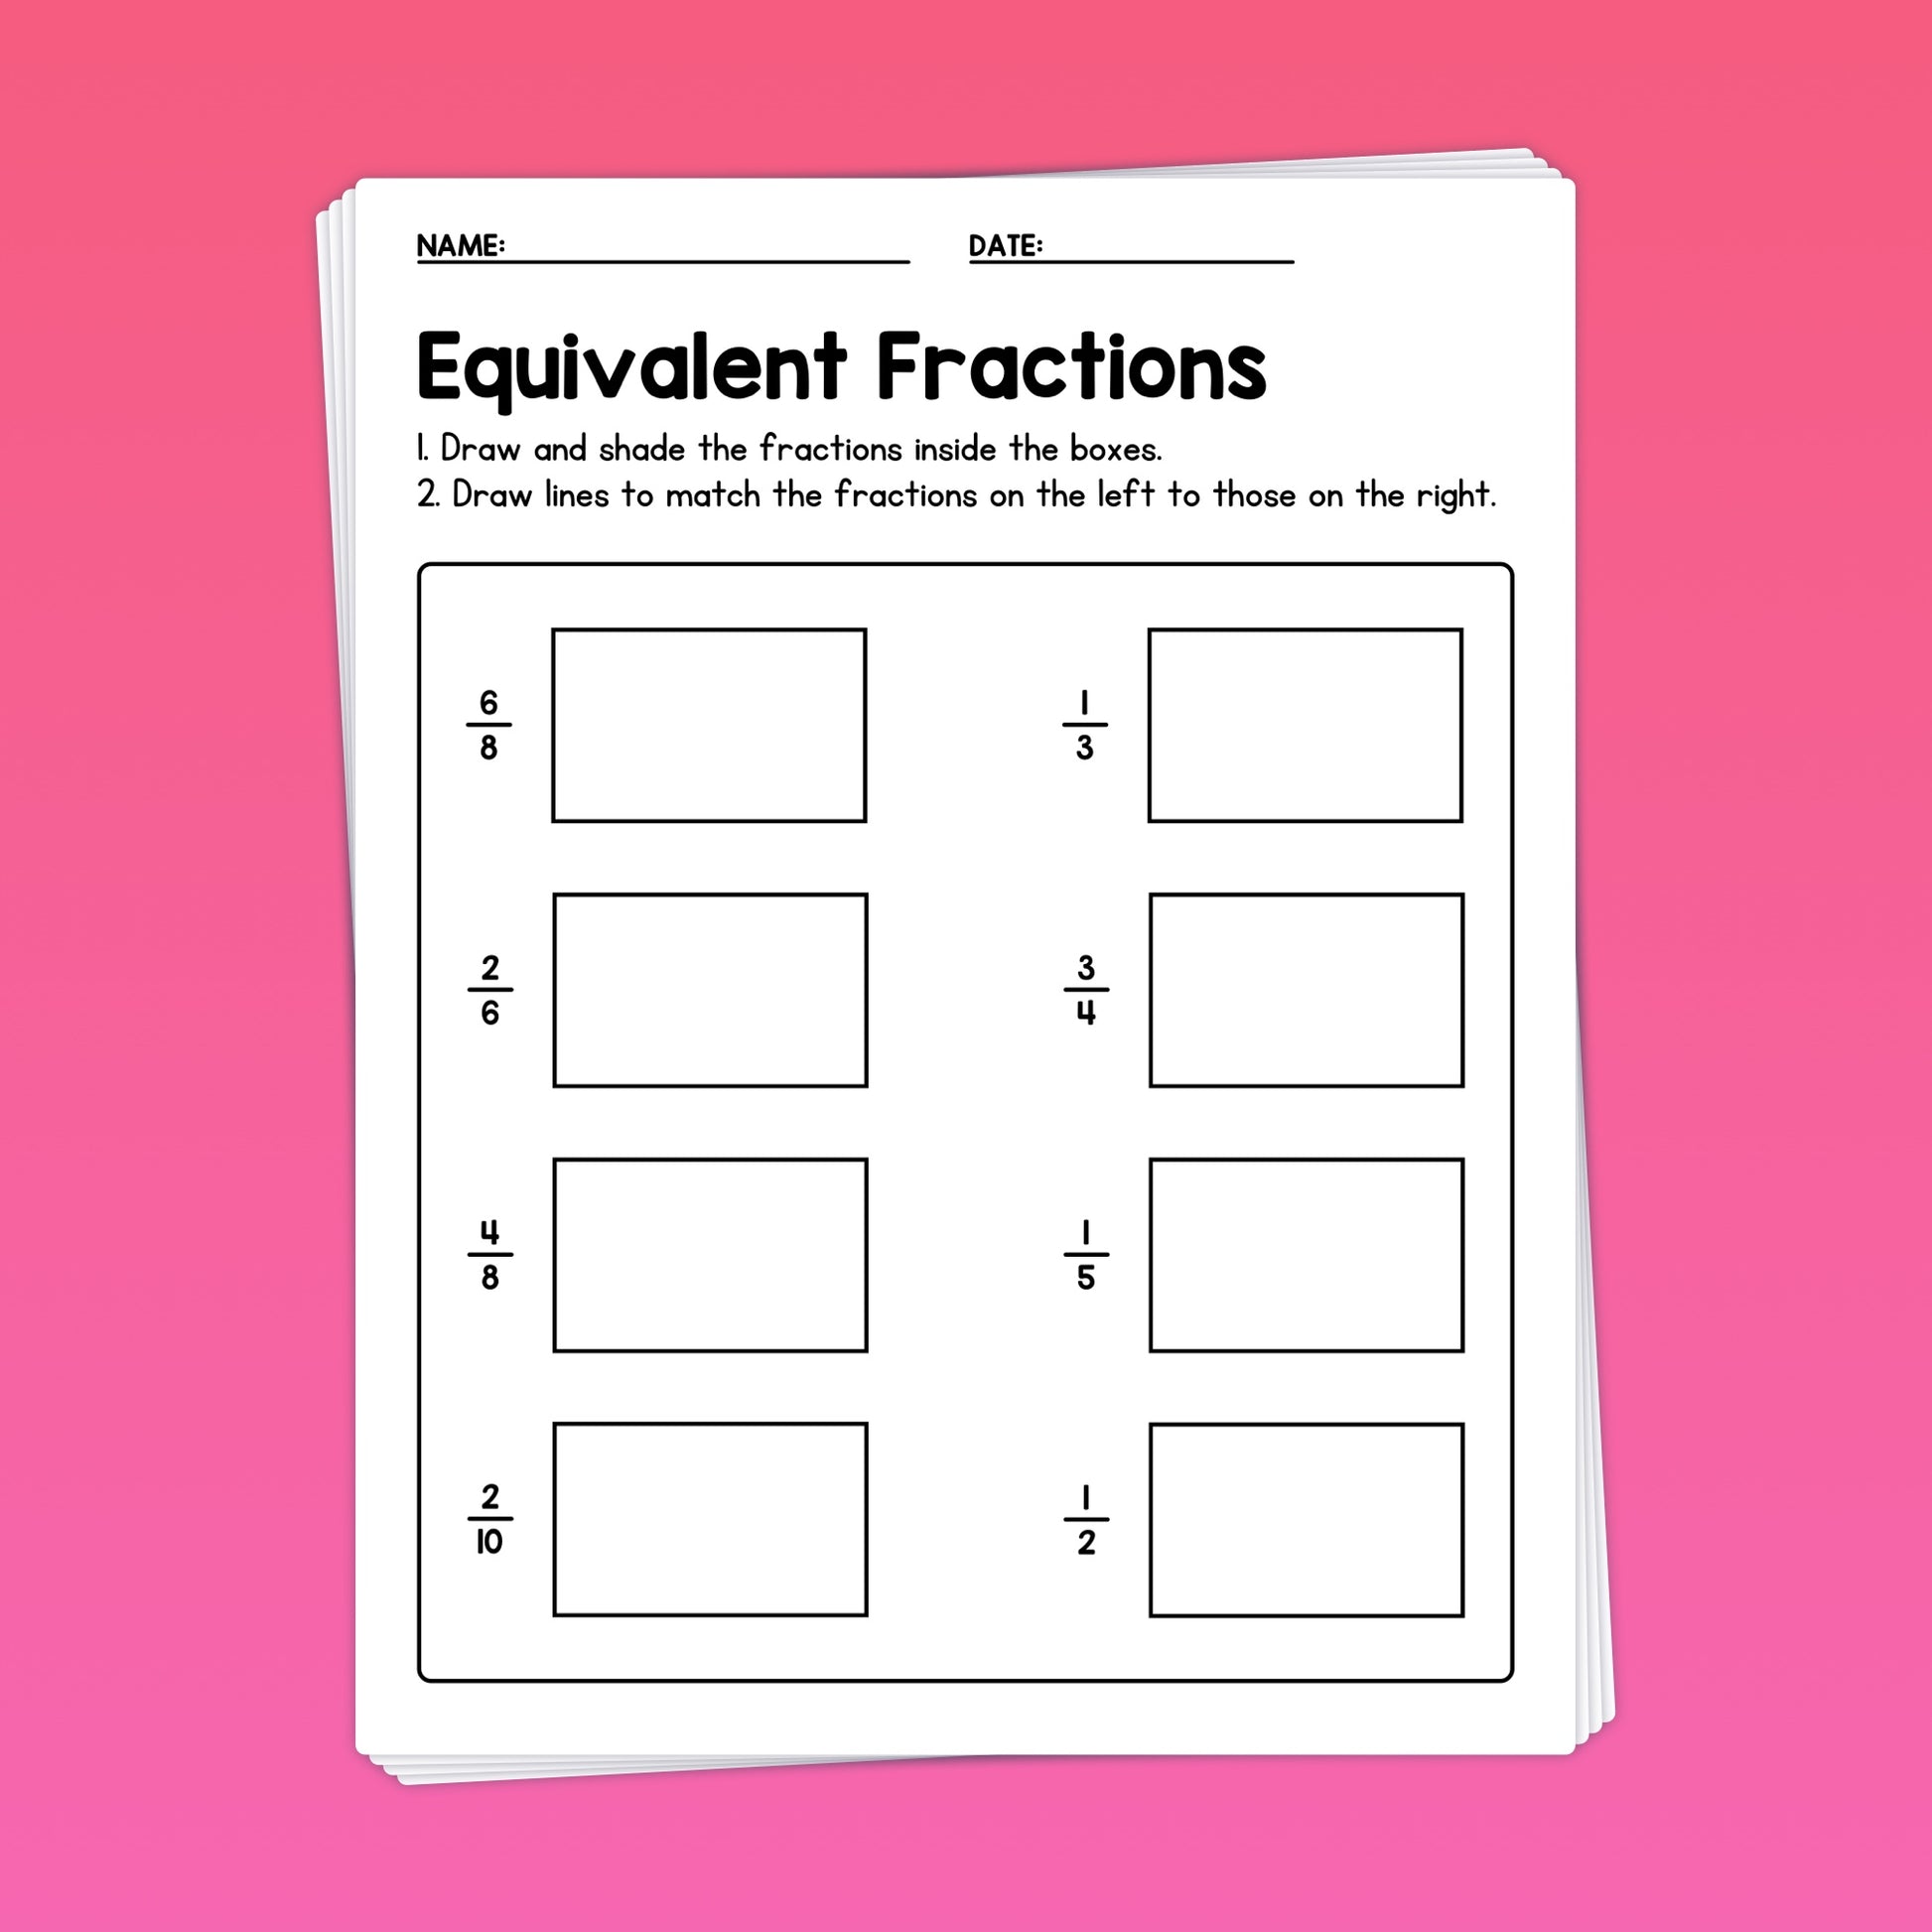 Practice equivalent fractions